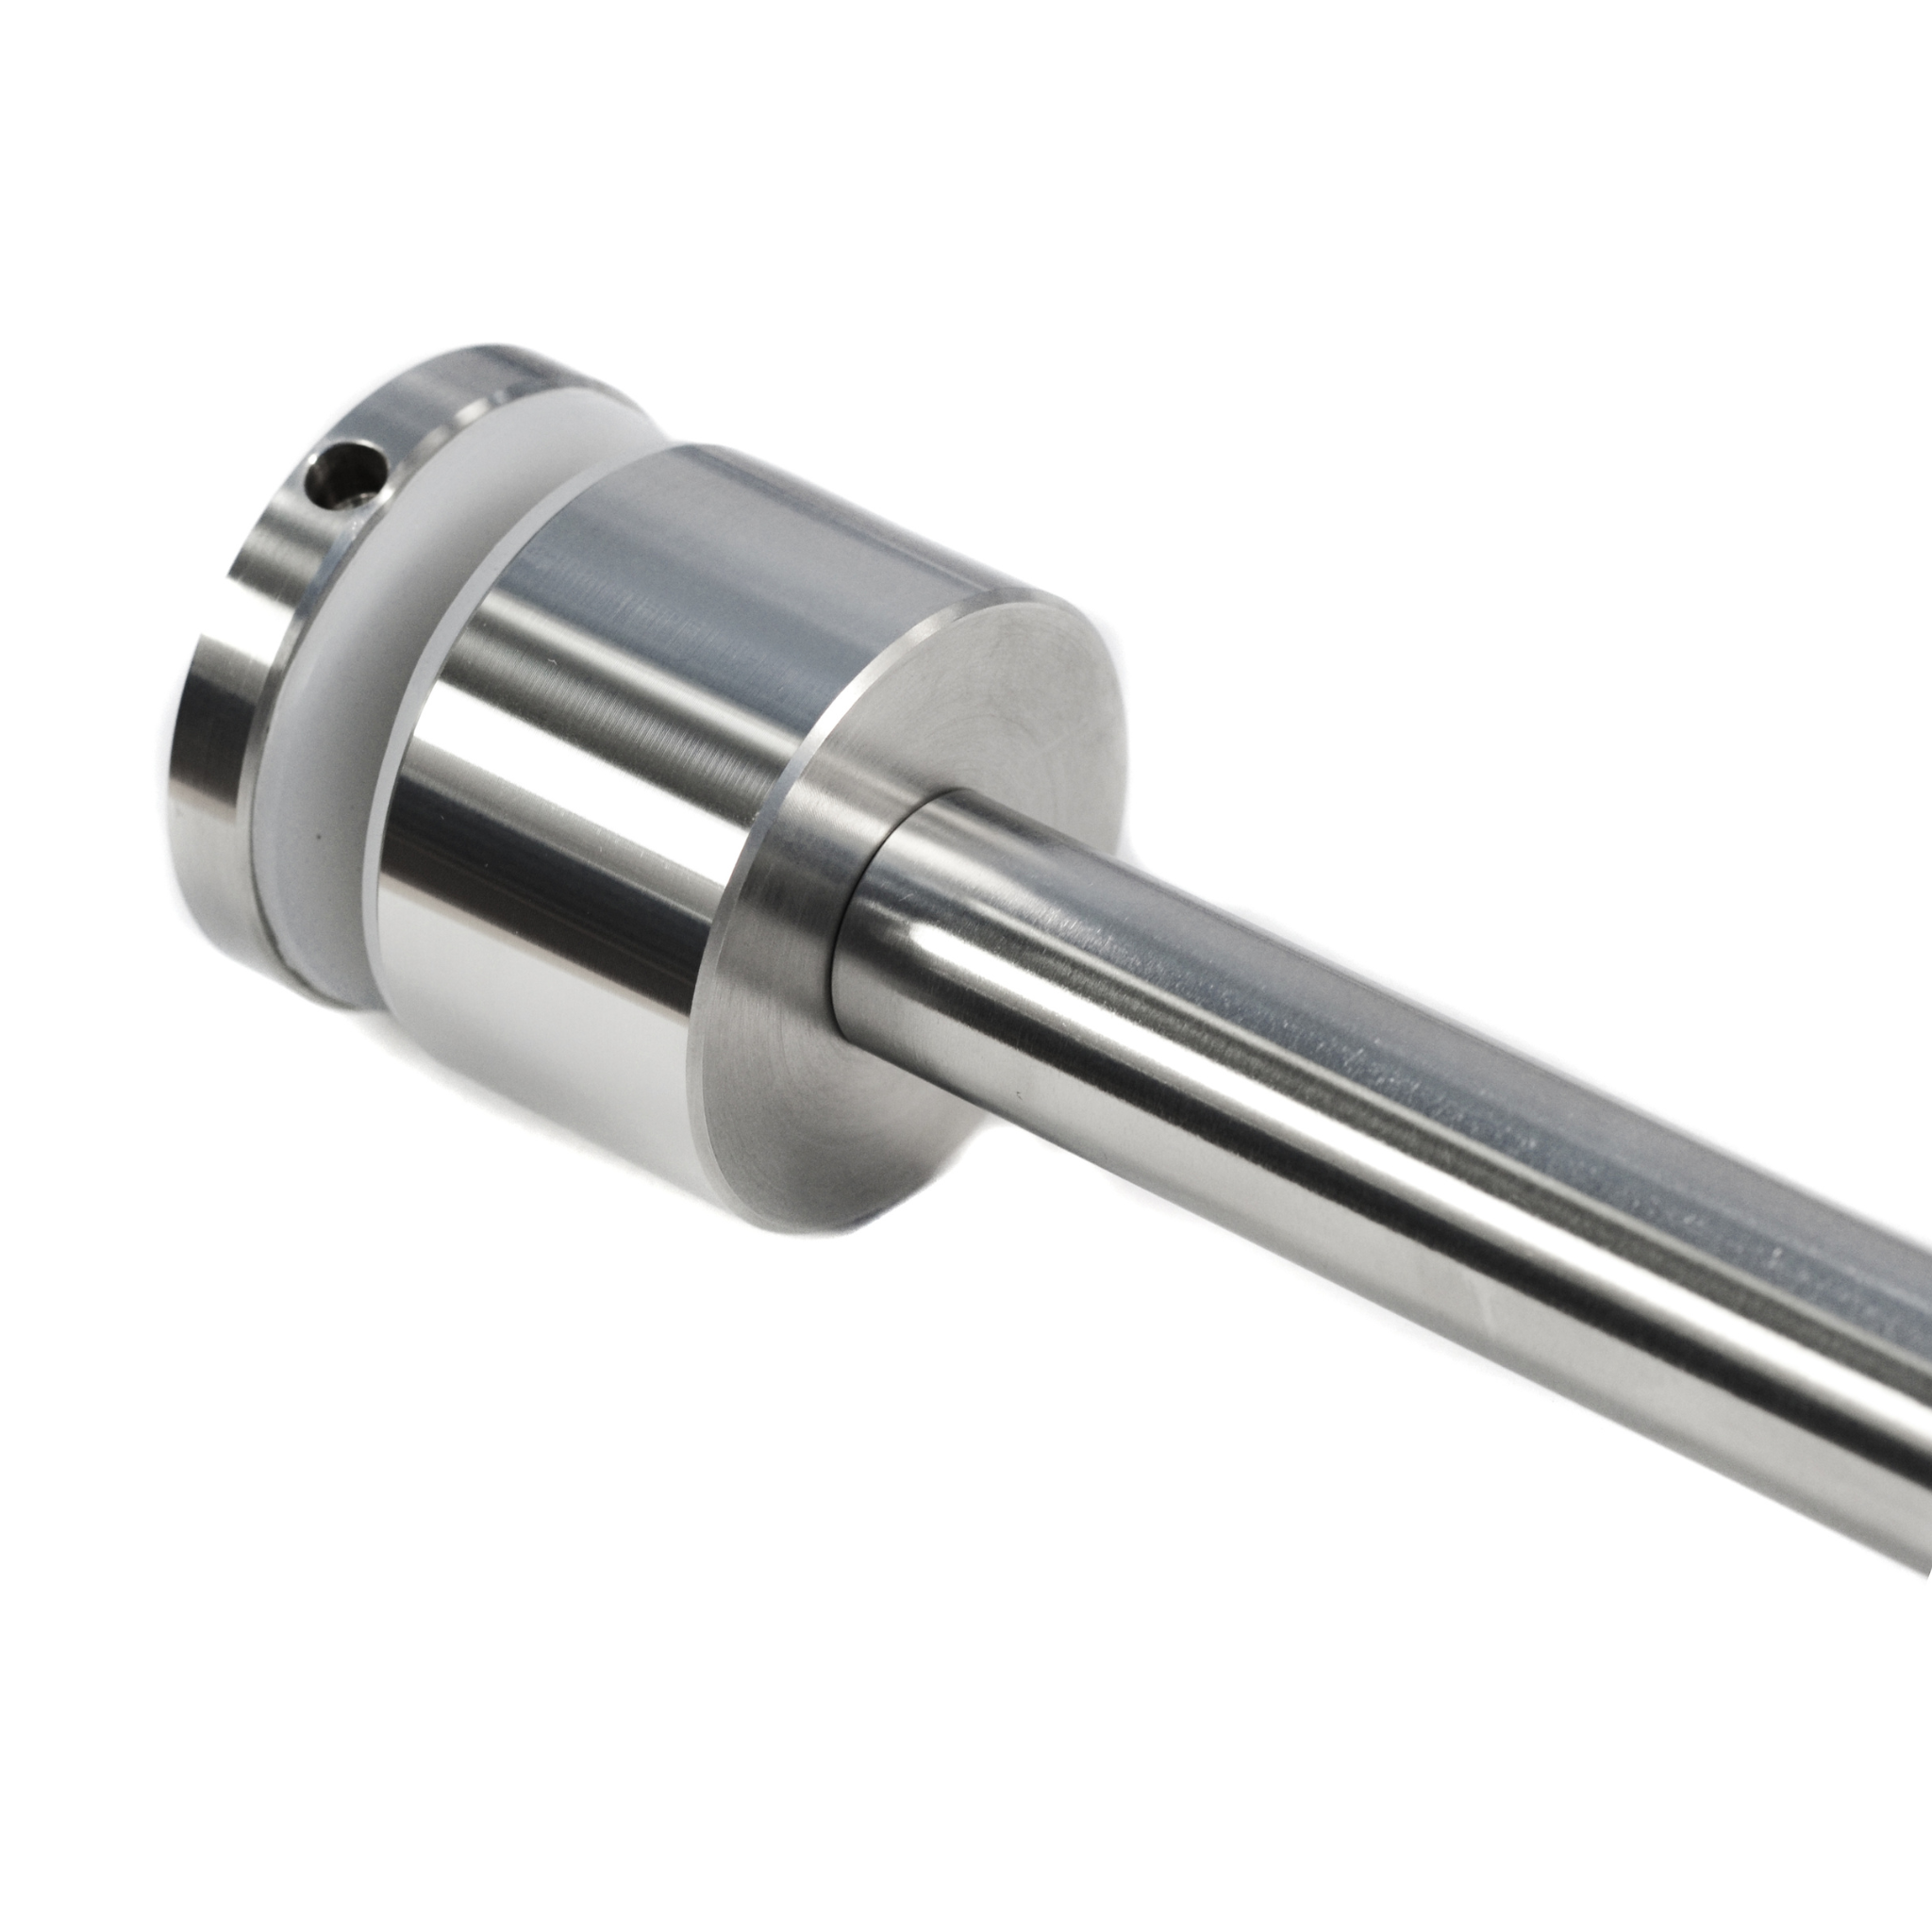 Glass holder (10-30mm) with rod 20x320mm - StroFIX